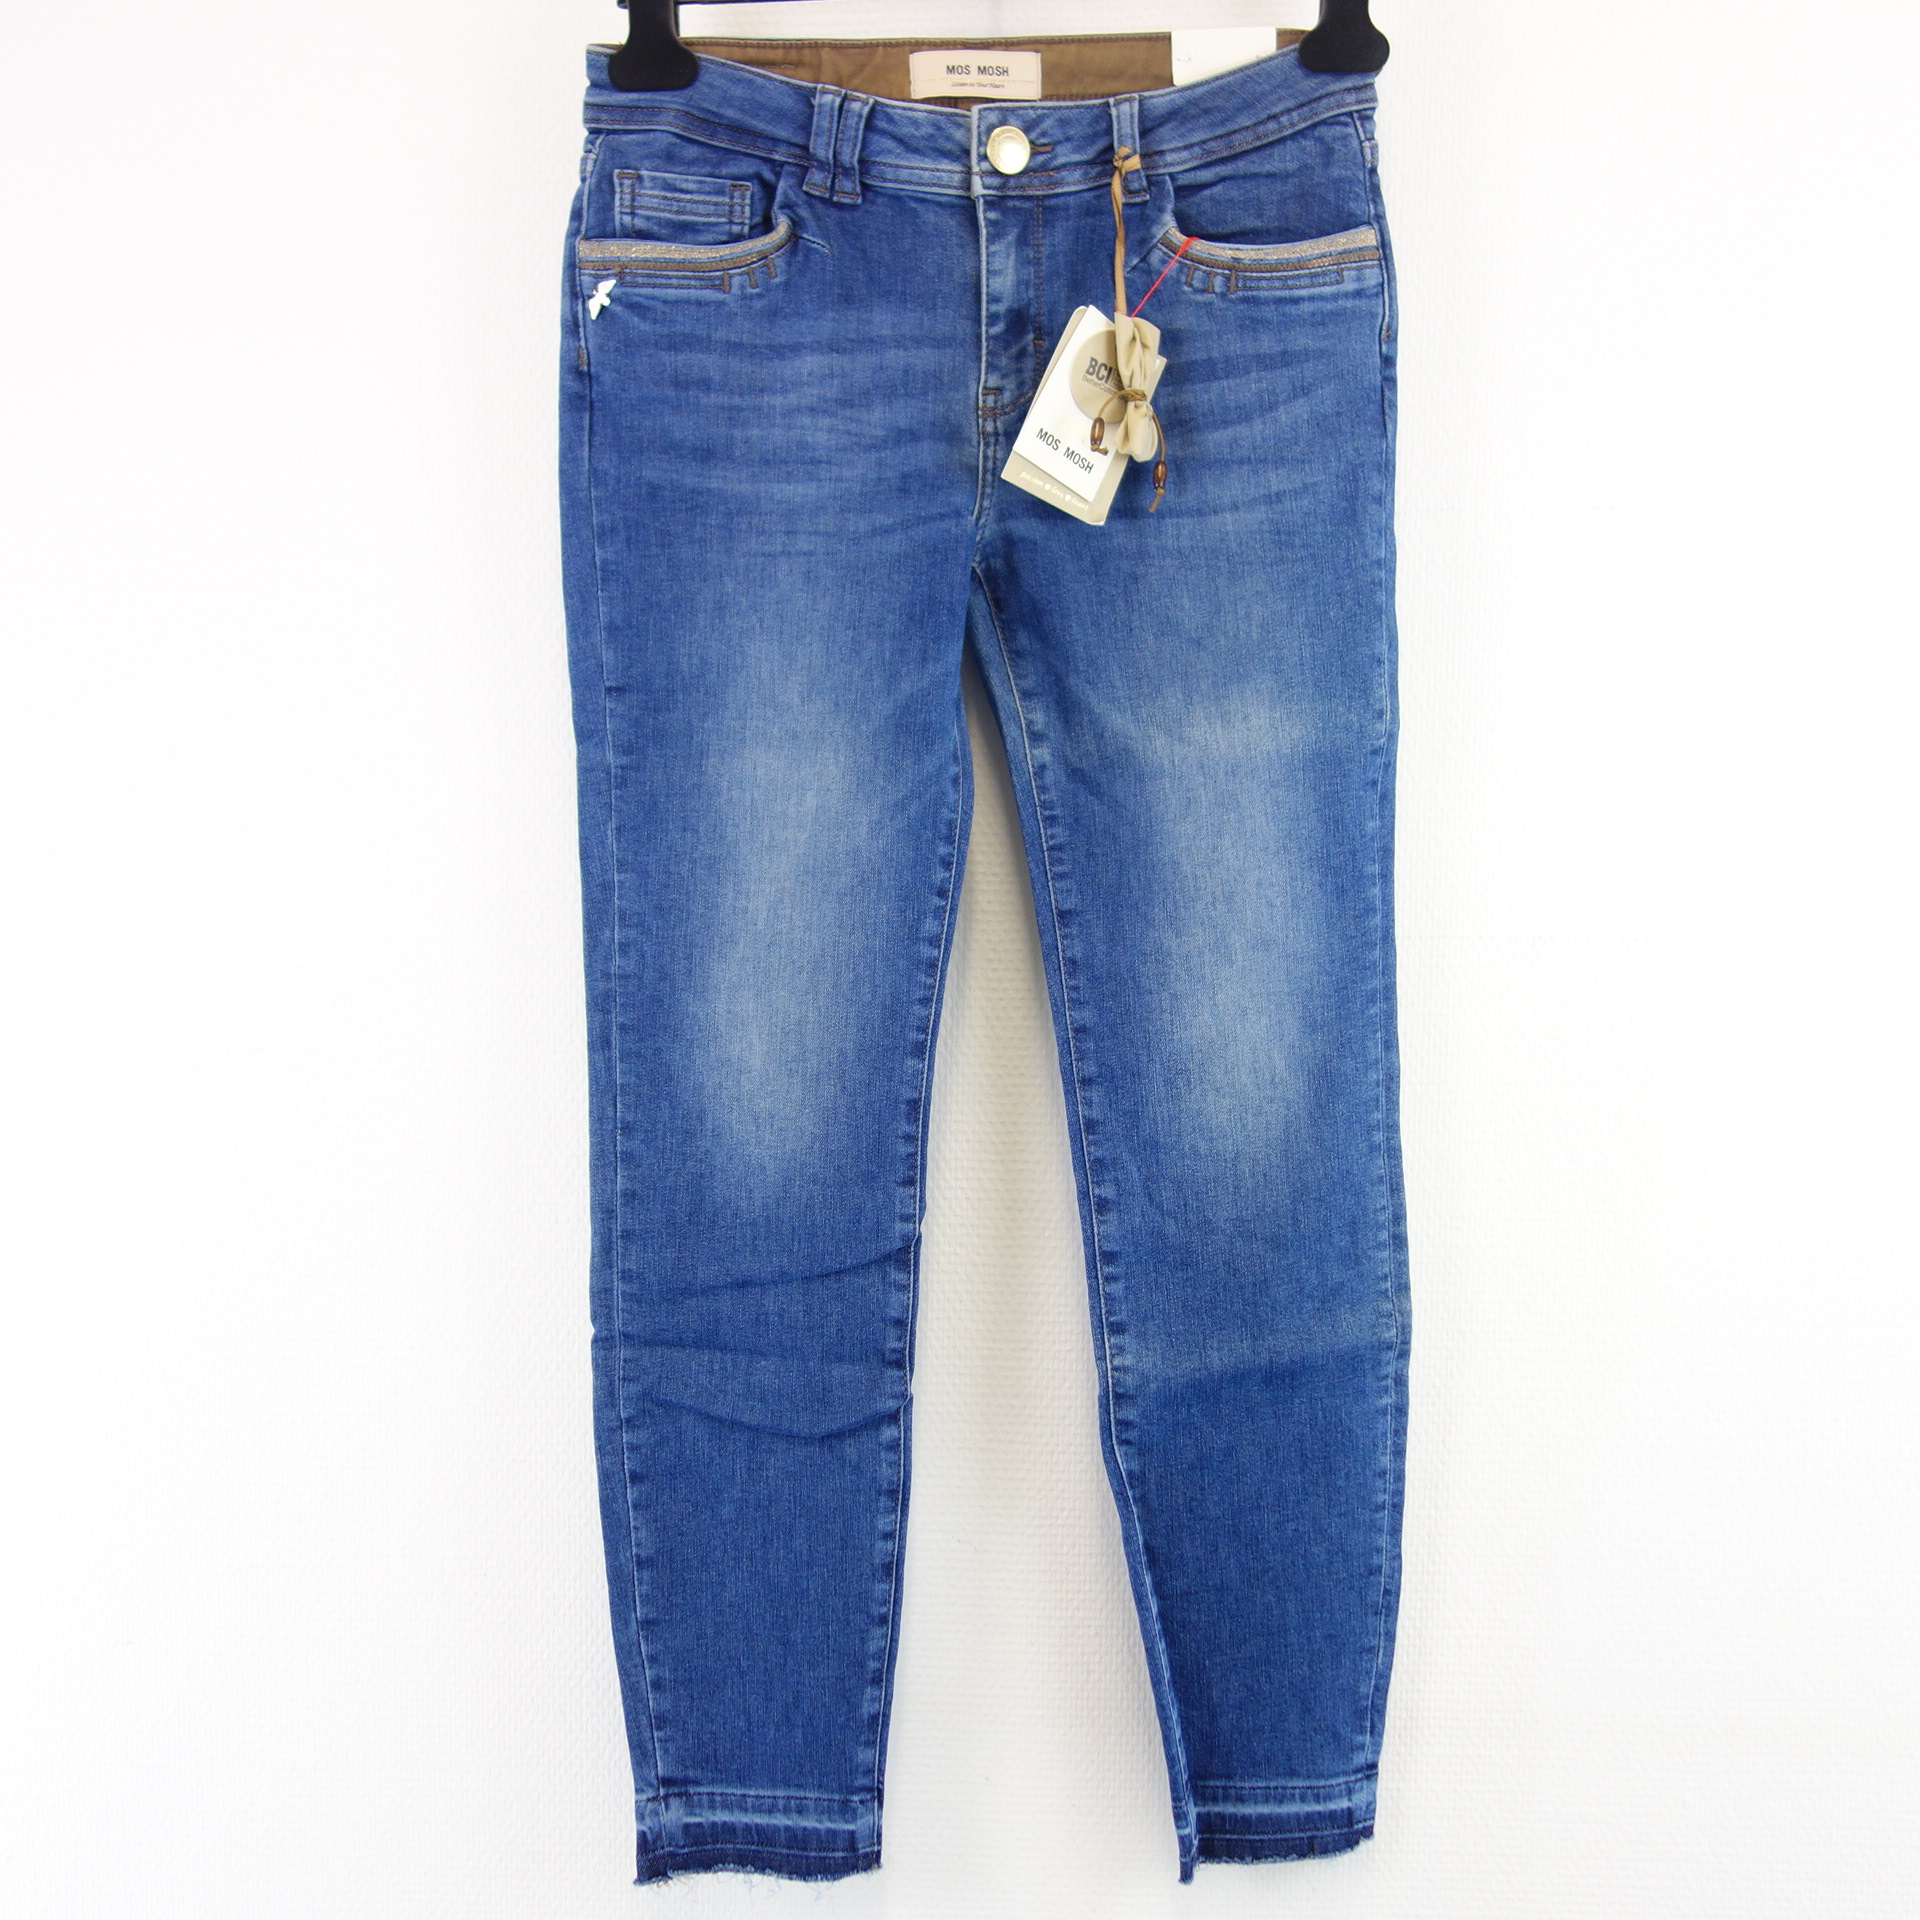 MOS MOSH Jeans Hose Blau Modell Sumner Jewel Ankle Slim Fit Cropped